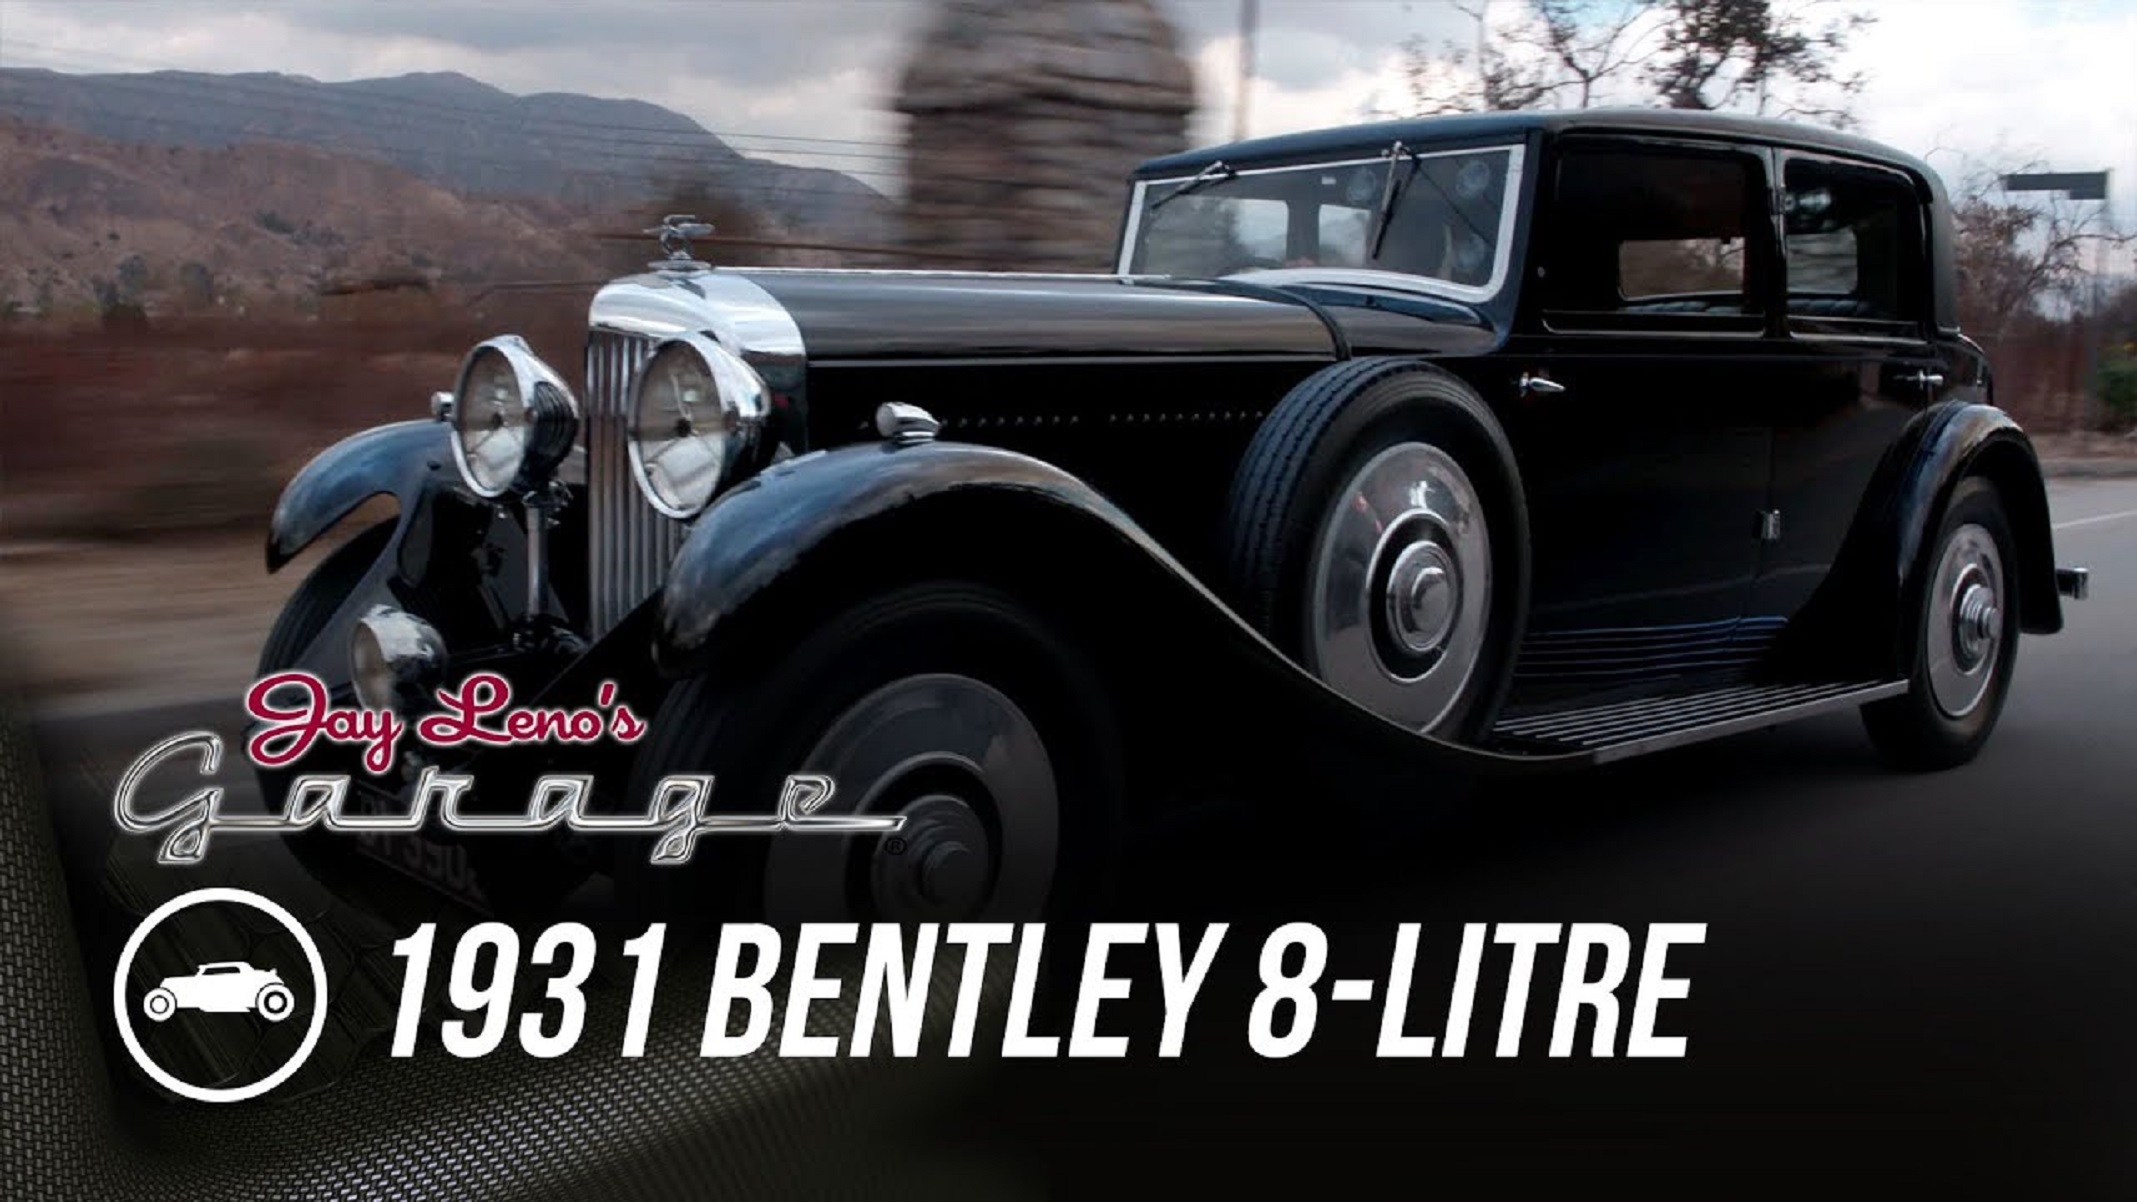 Jay Leno's black 1931 Bentley 8 Litre Mulliner sedan